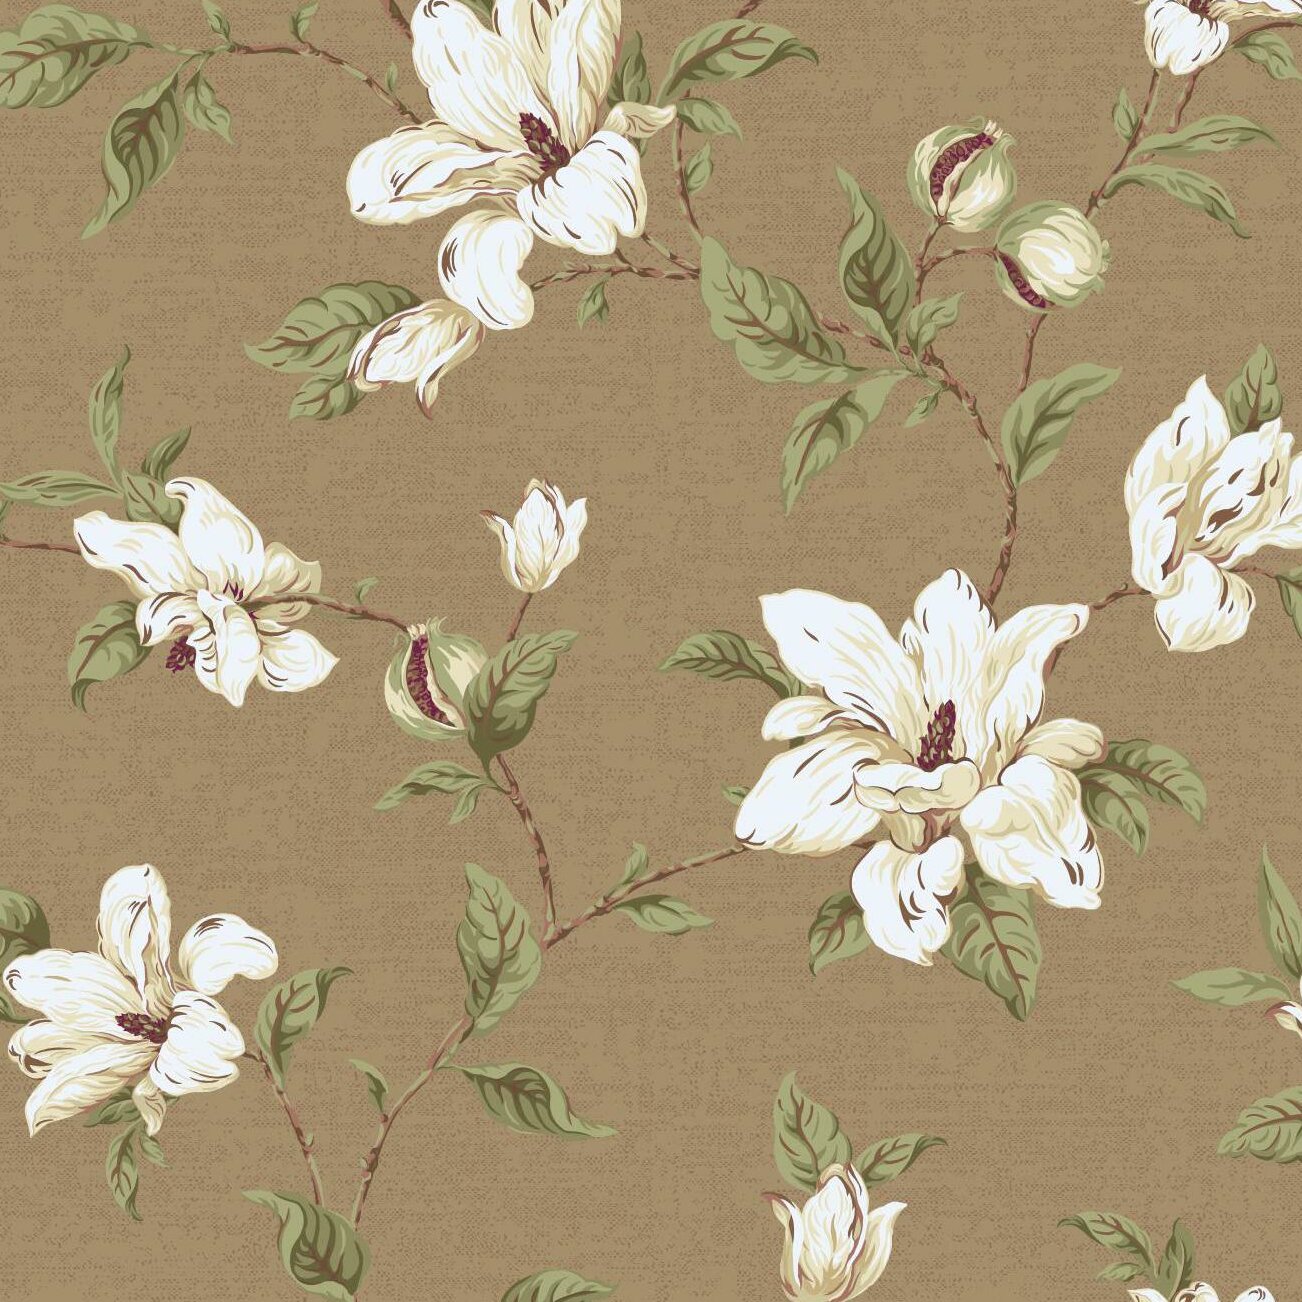 Home Garden White Magnolias Satin Finish Mauve Backround Floral Wallpaper Border Wall Decor Wallpaper Accessories